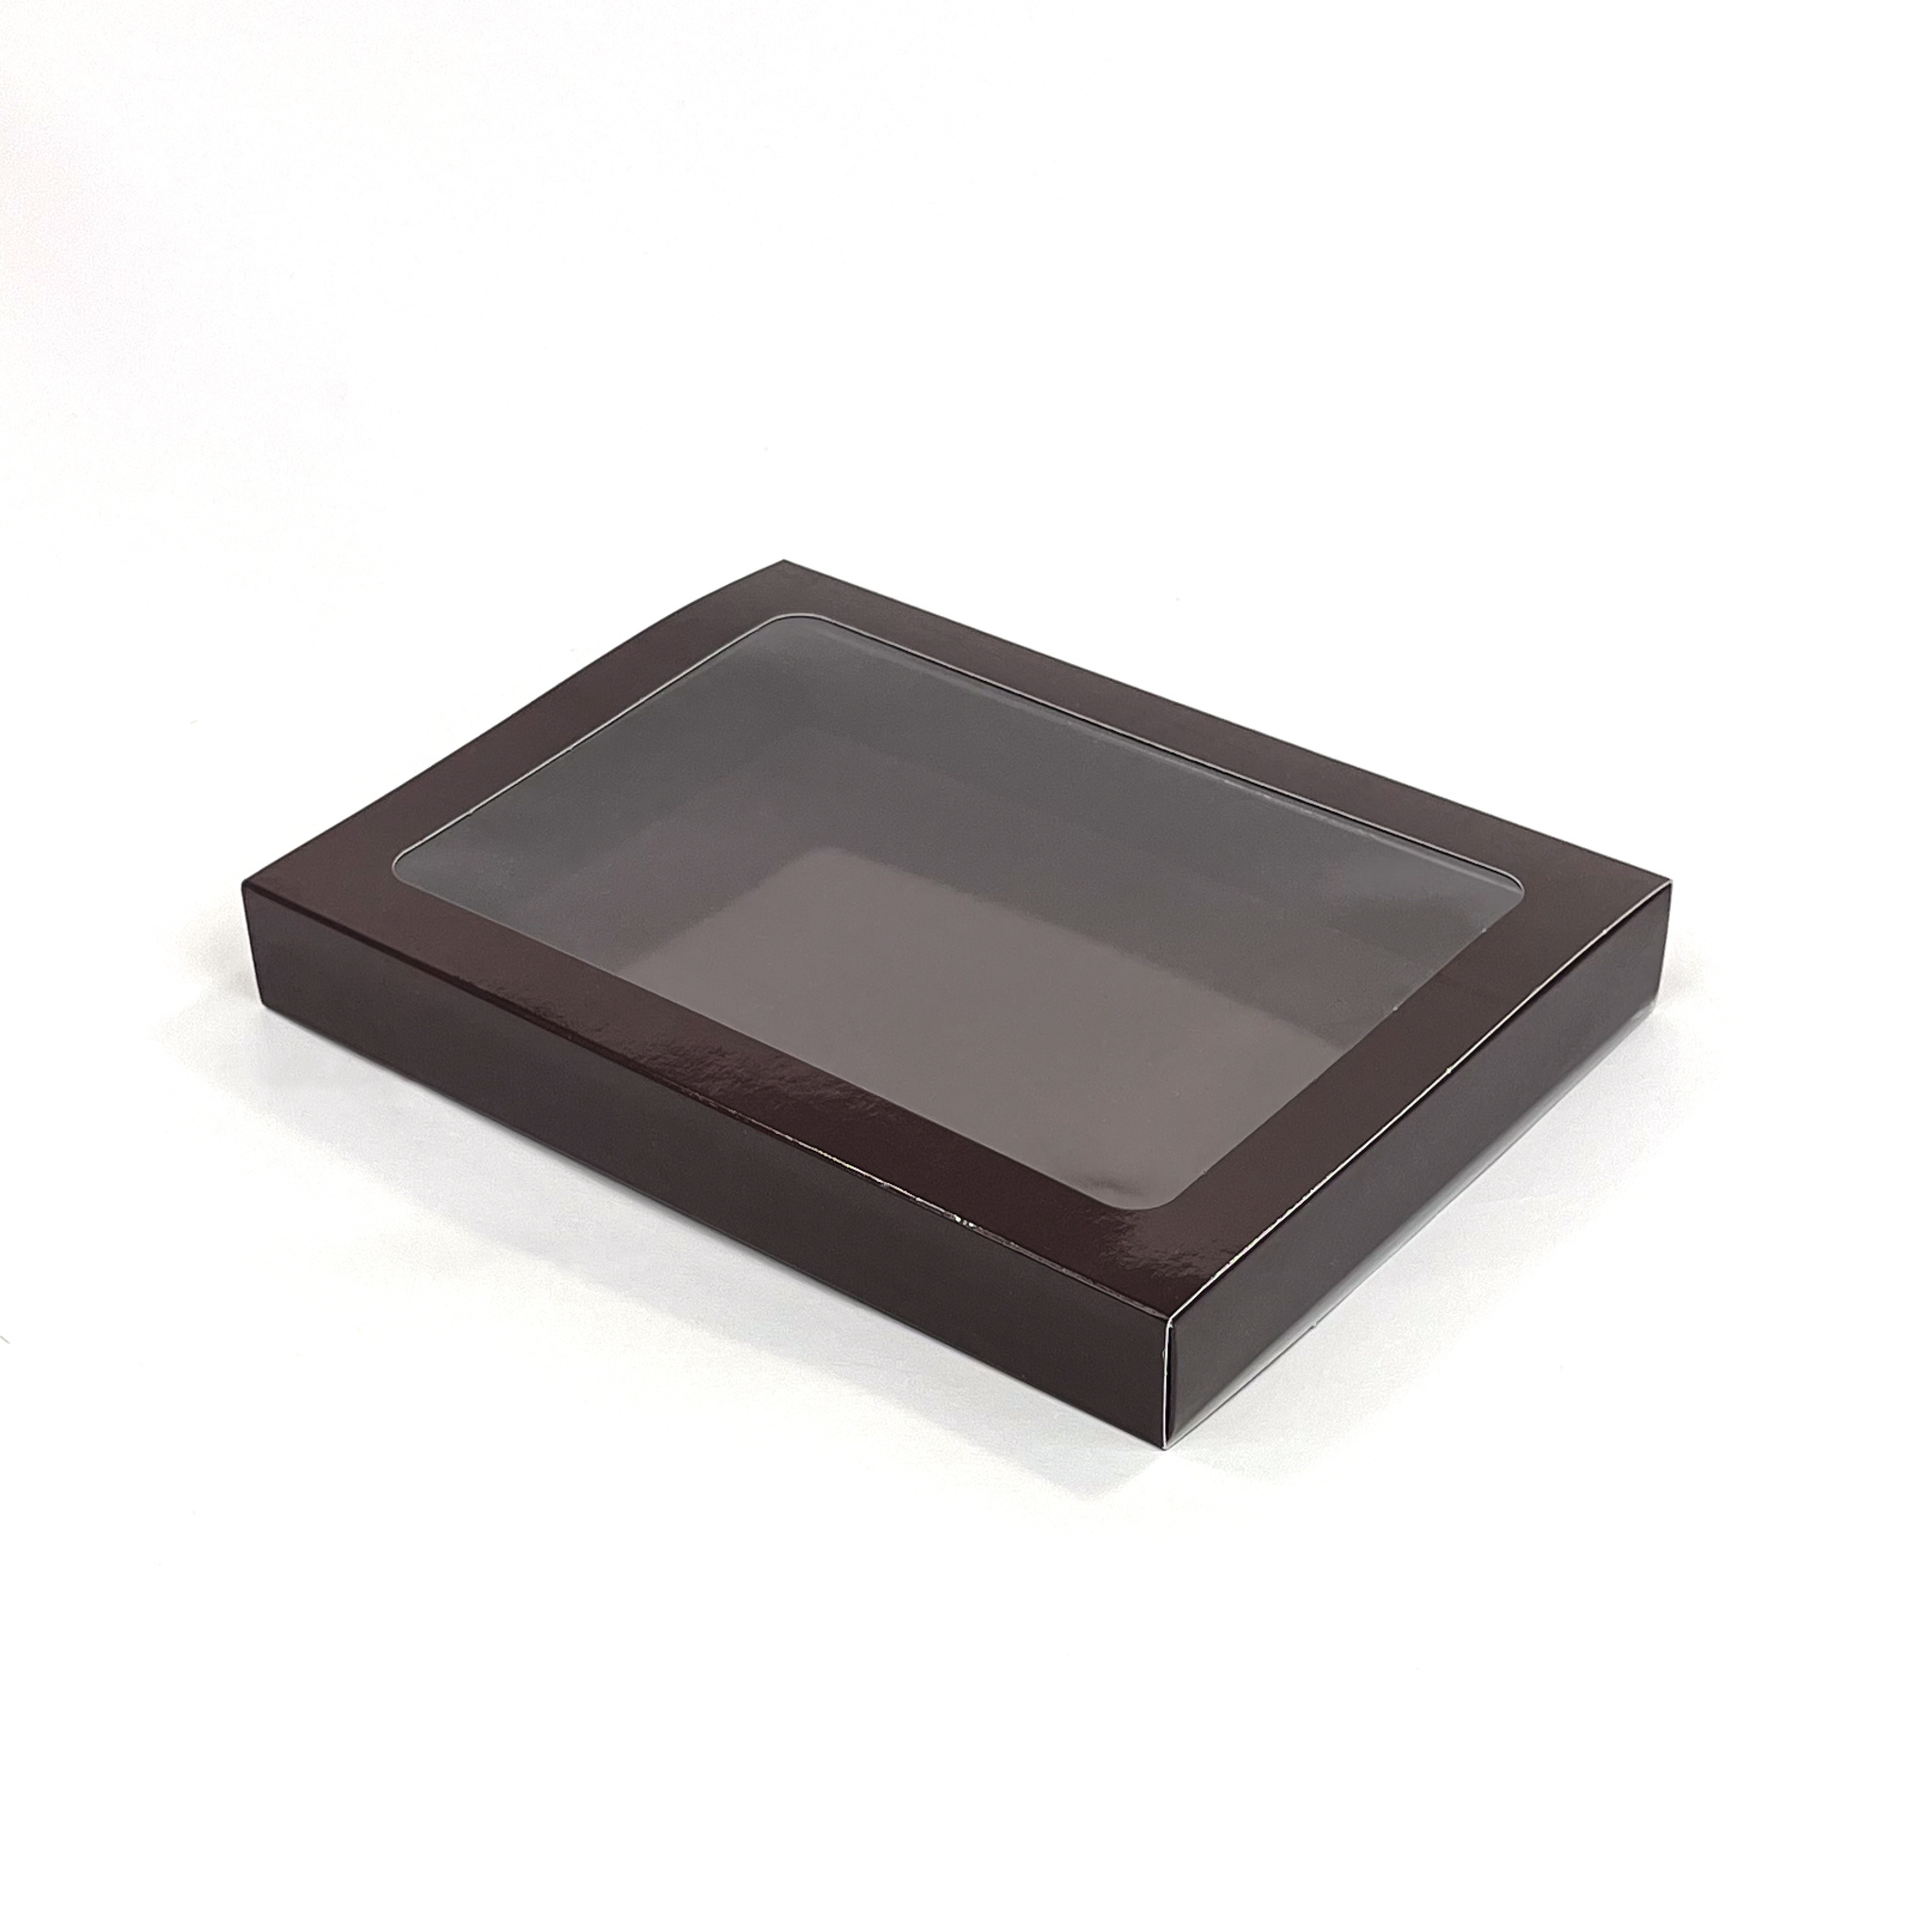 GK7 Window box with sleeve (dark brown) - 175*120*27mm - 100 pieces